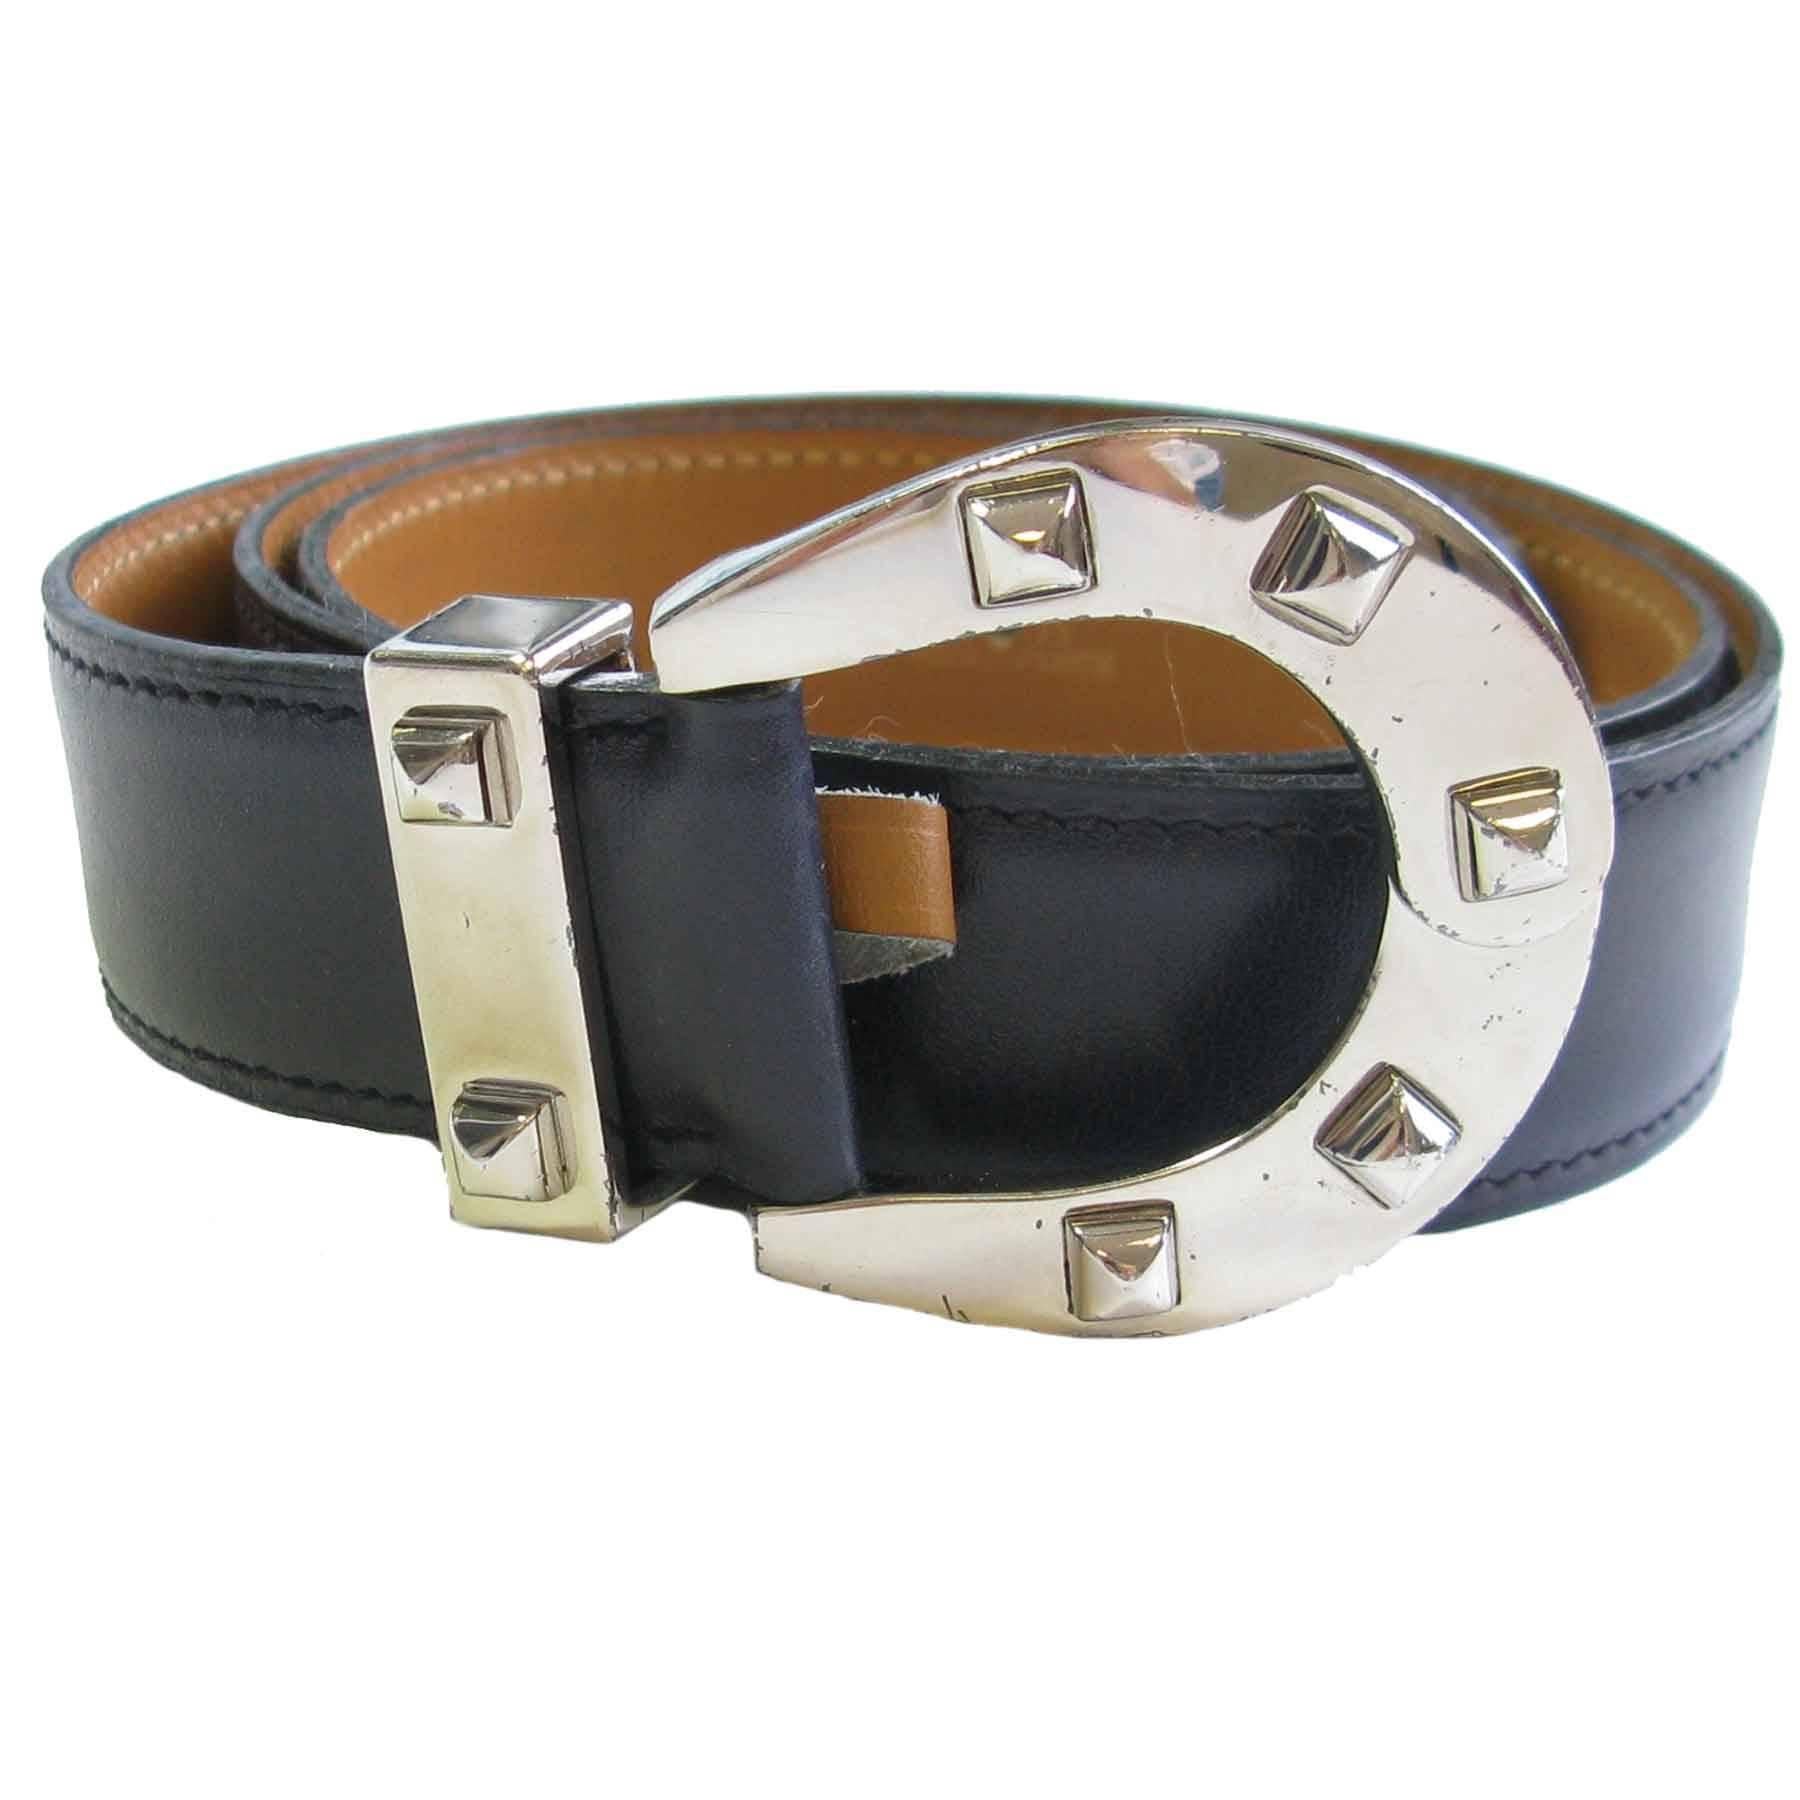 HERMES Navy Blue Leather Belt with Horseshoe Buckle Size 72 FR